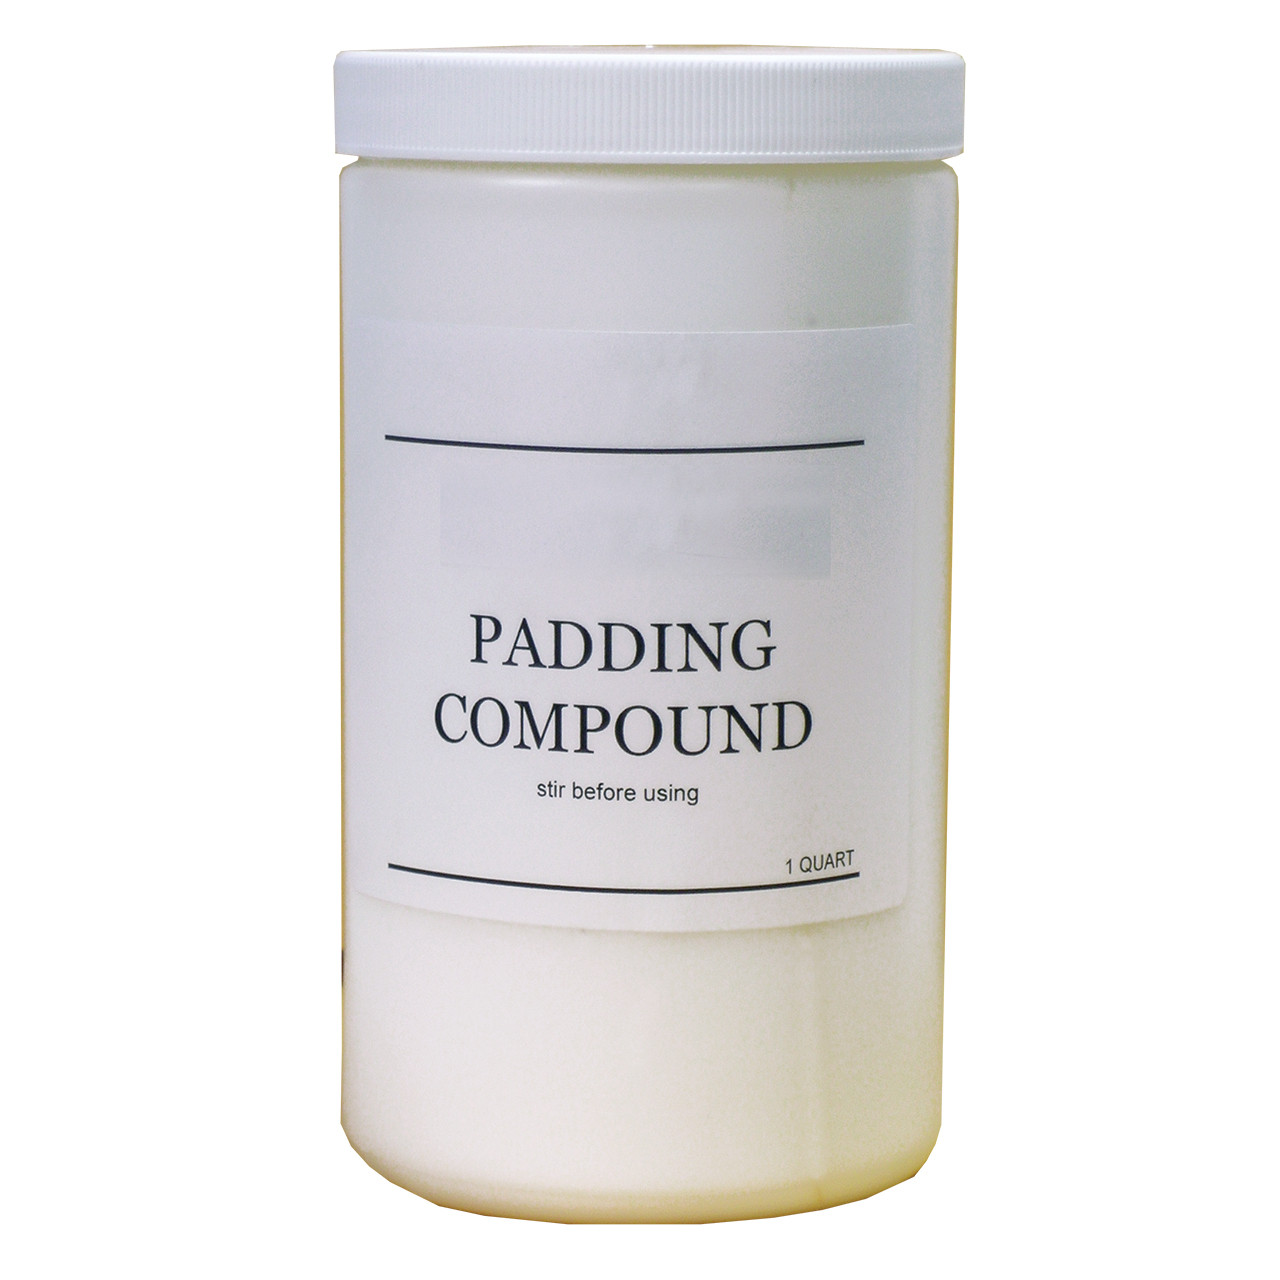 Padding Compound